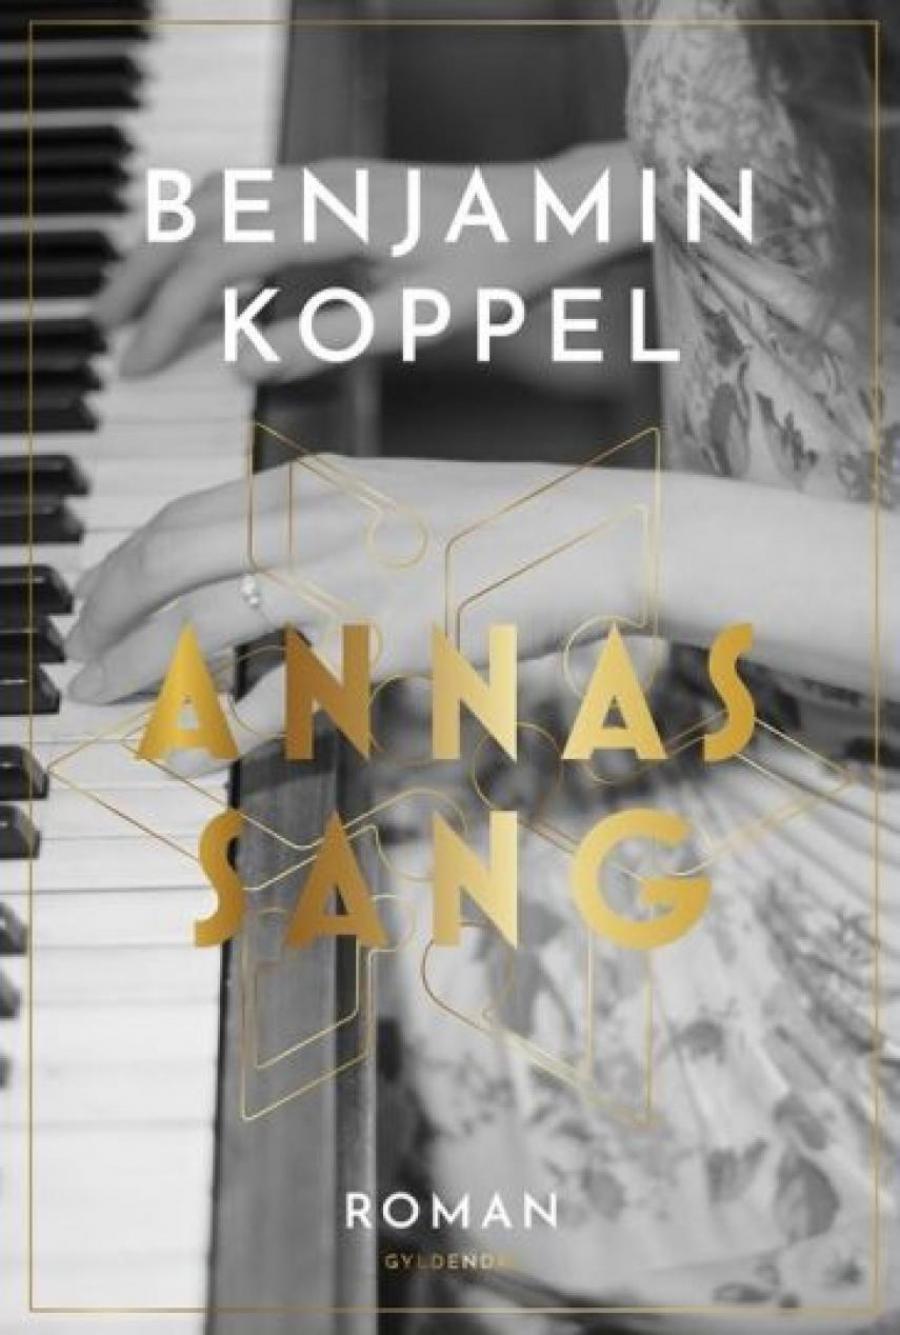 Annas sang af Benjamin Koppel